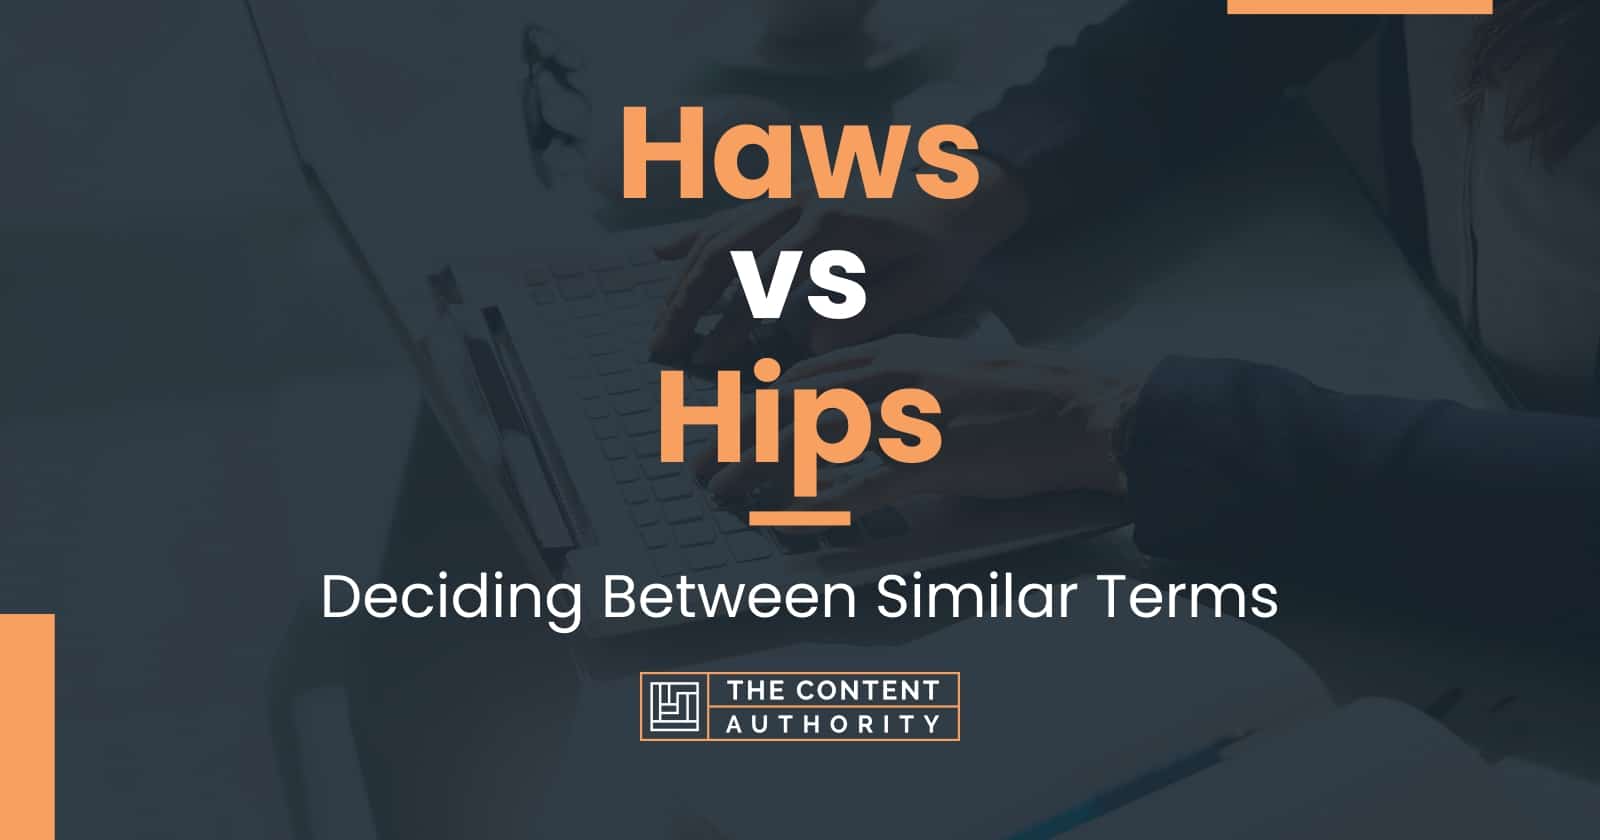 Haws vs Hips: Deciding Between Similar Terms